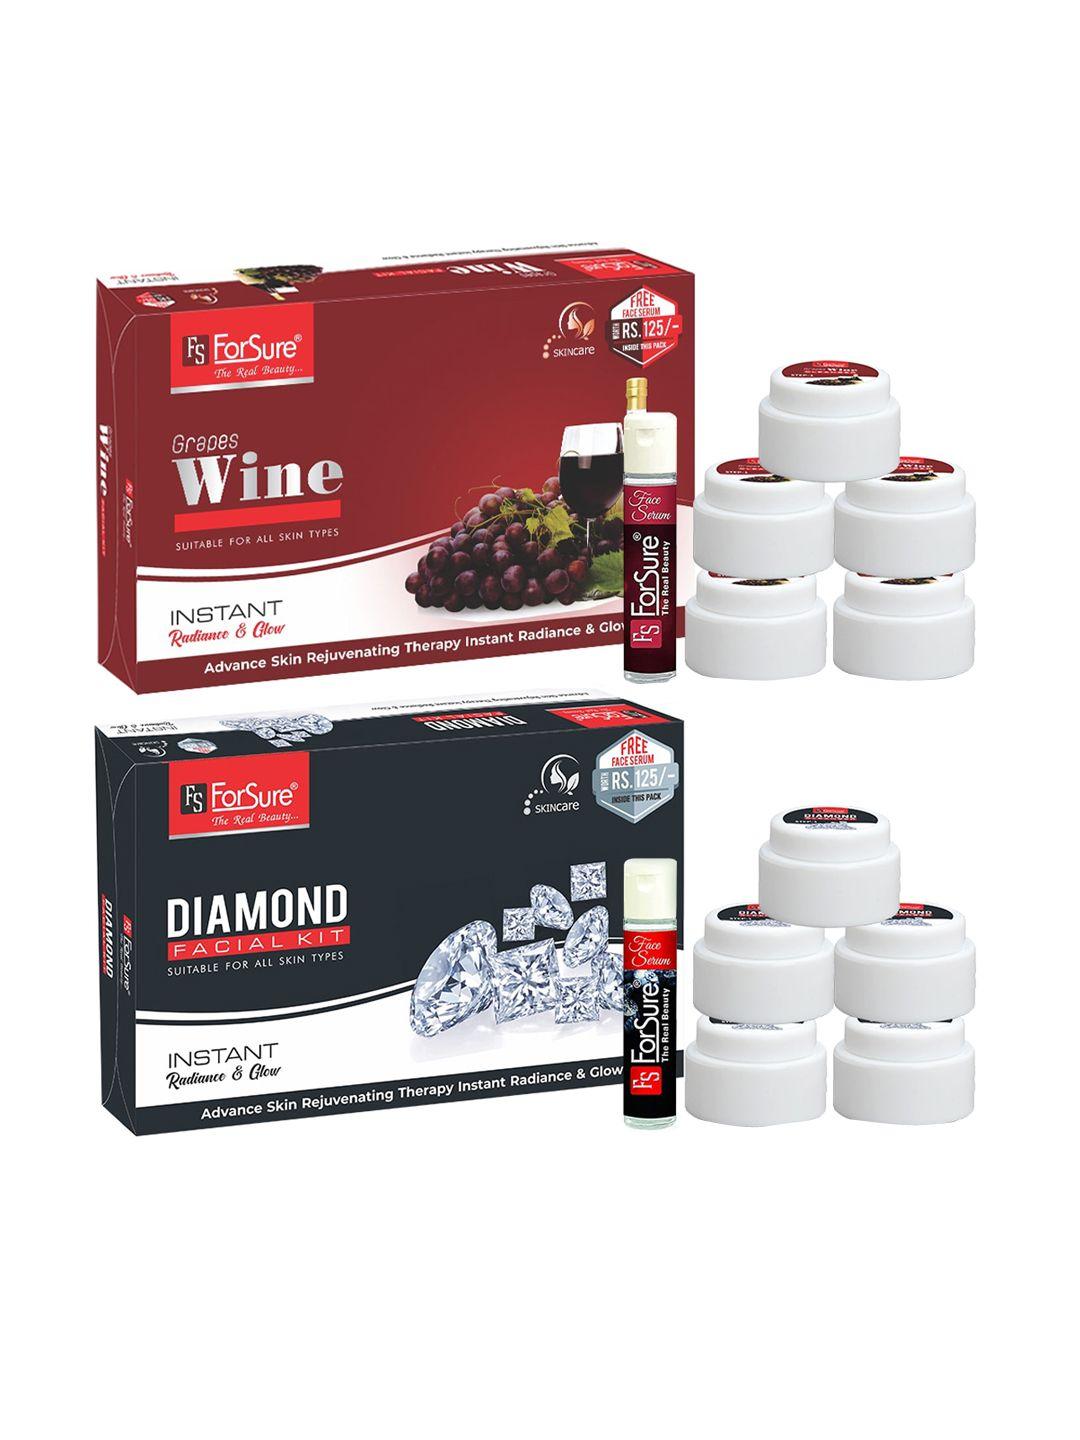 forsure set of wine & diamond facial kit - 80 g each